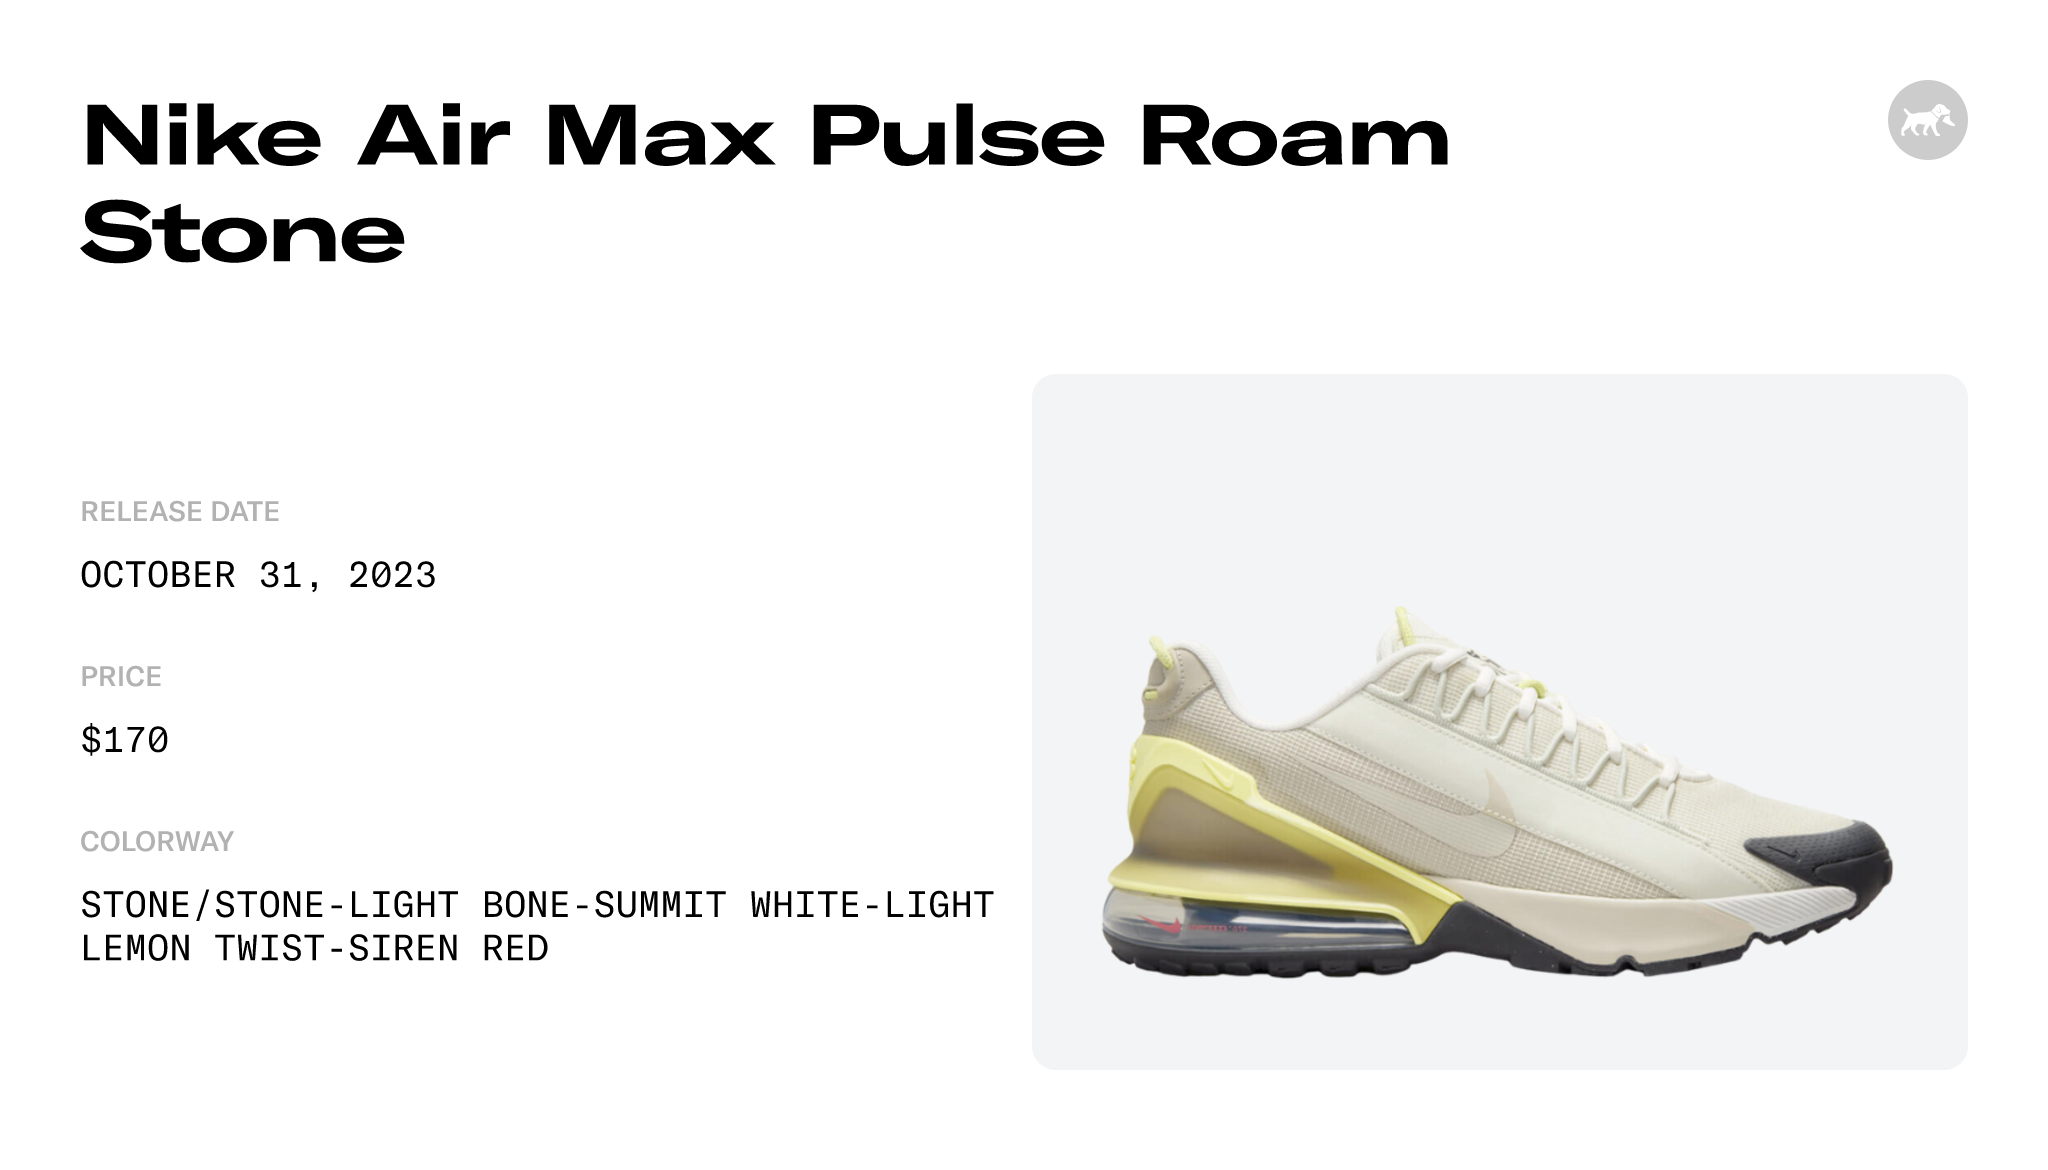 Nike Air Max Pulse Roam Stone - DZ3544-200 Raffles and Release Date